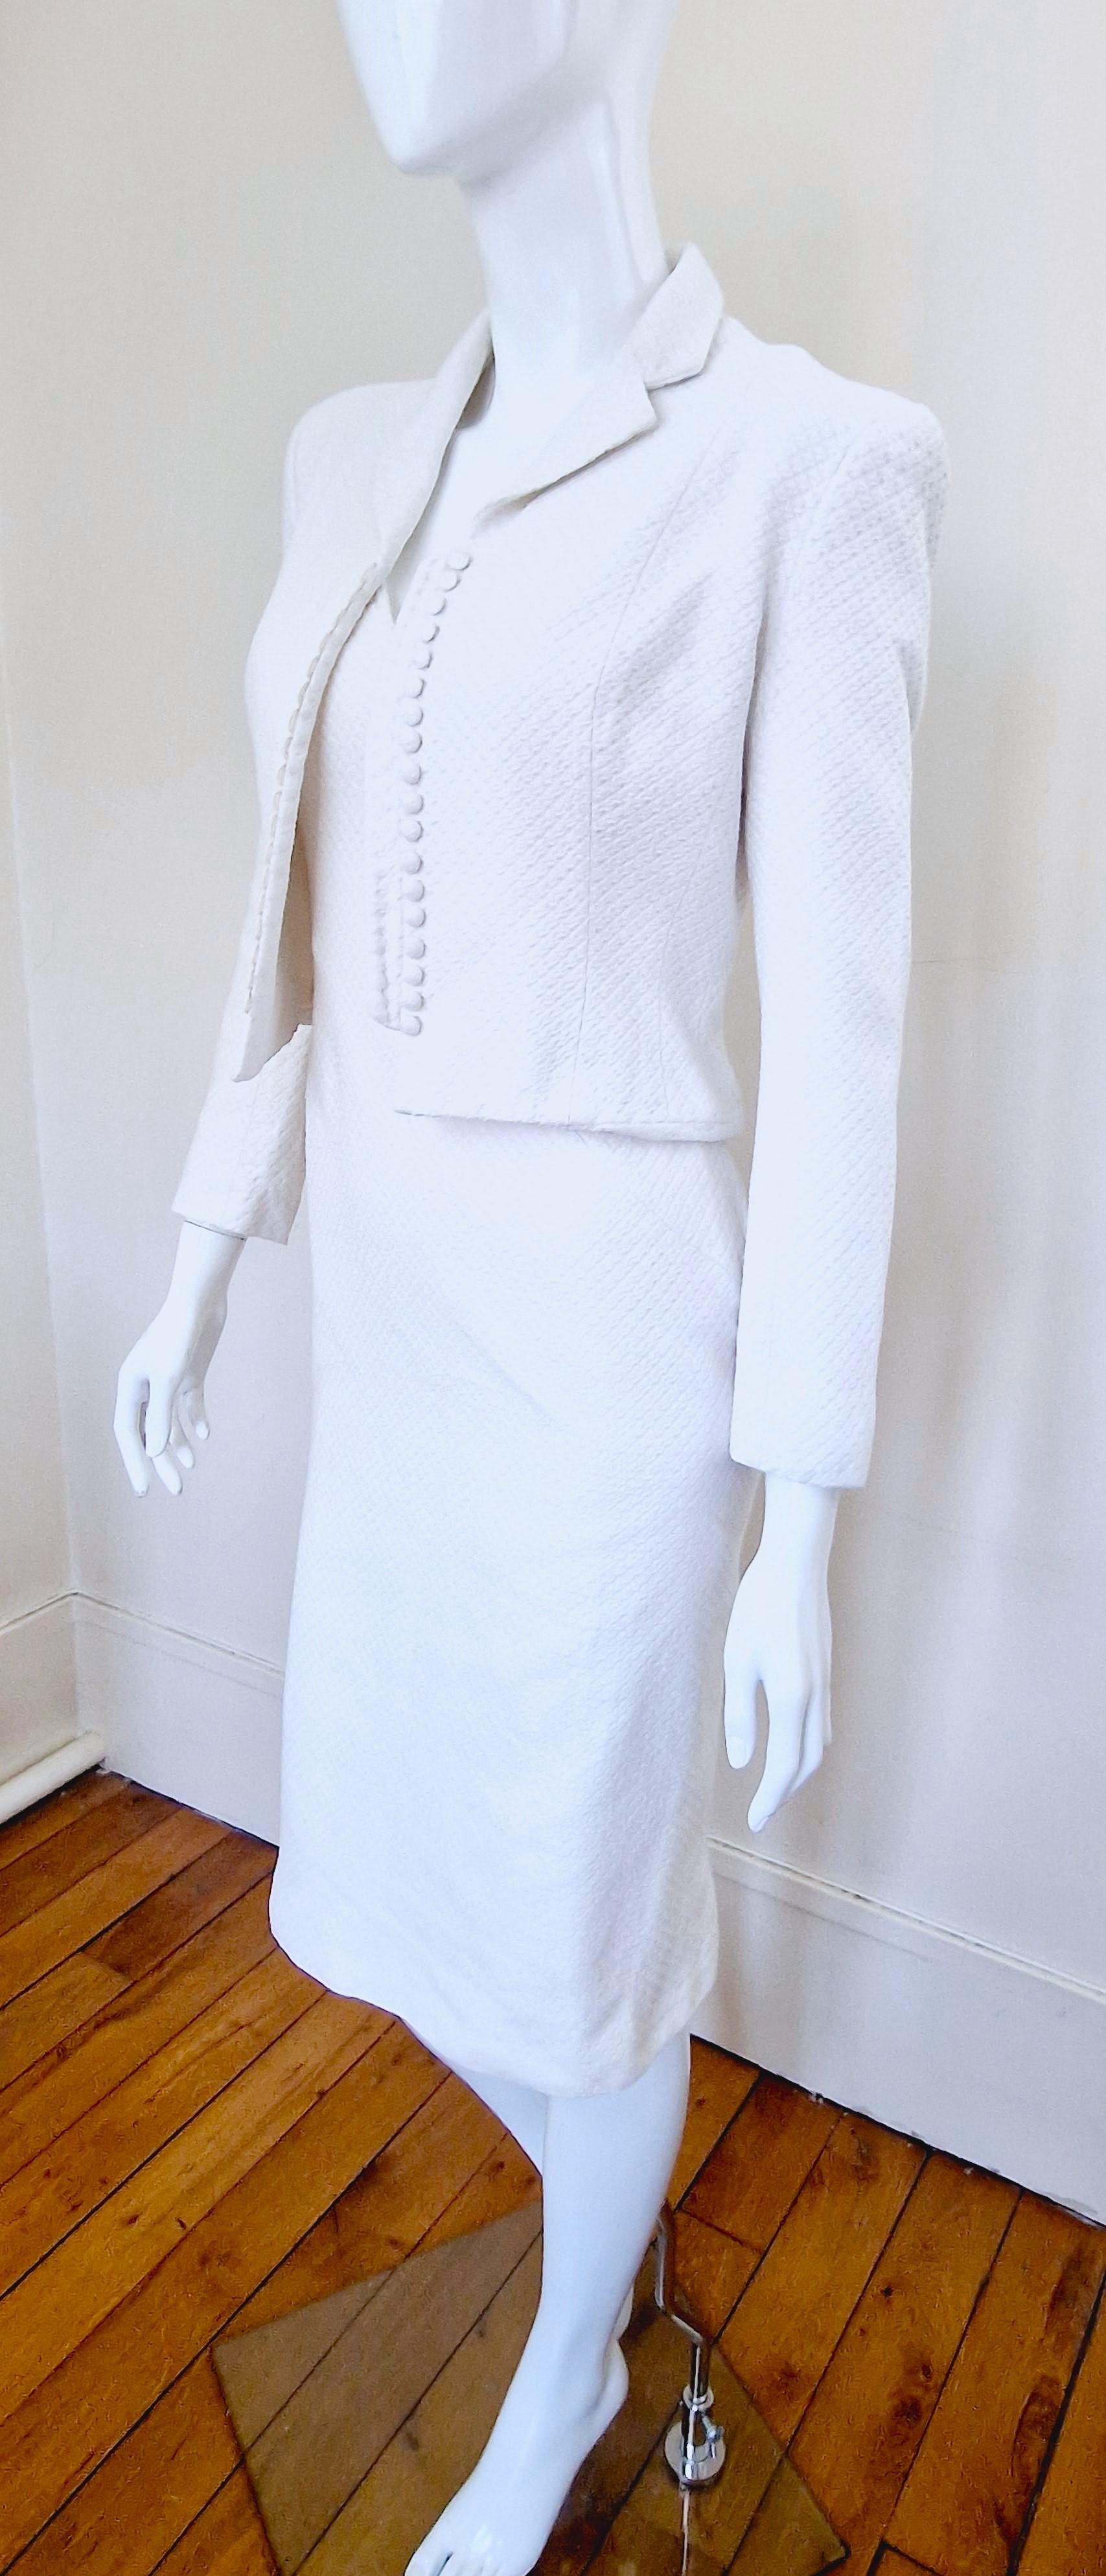 Early John Galliano Vintage White Blazer Evening Jacket Ensemble Dress Set Suit For Sale 5